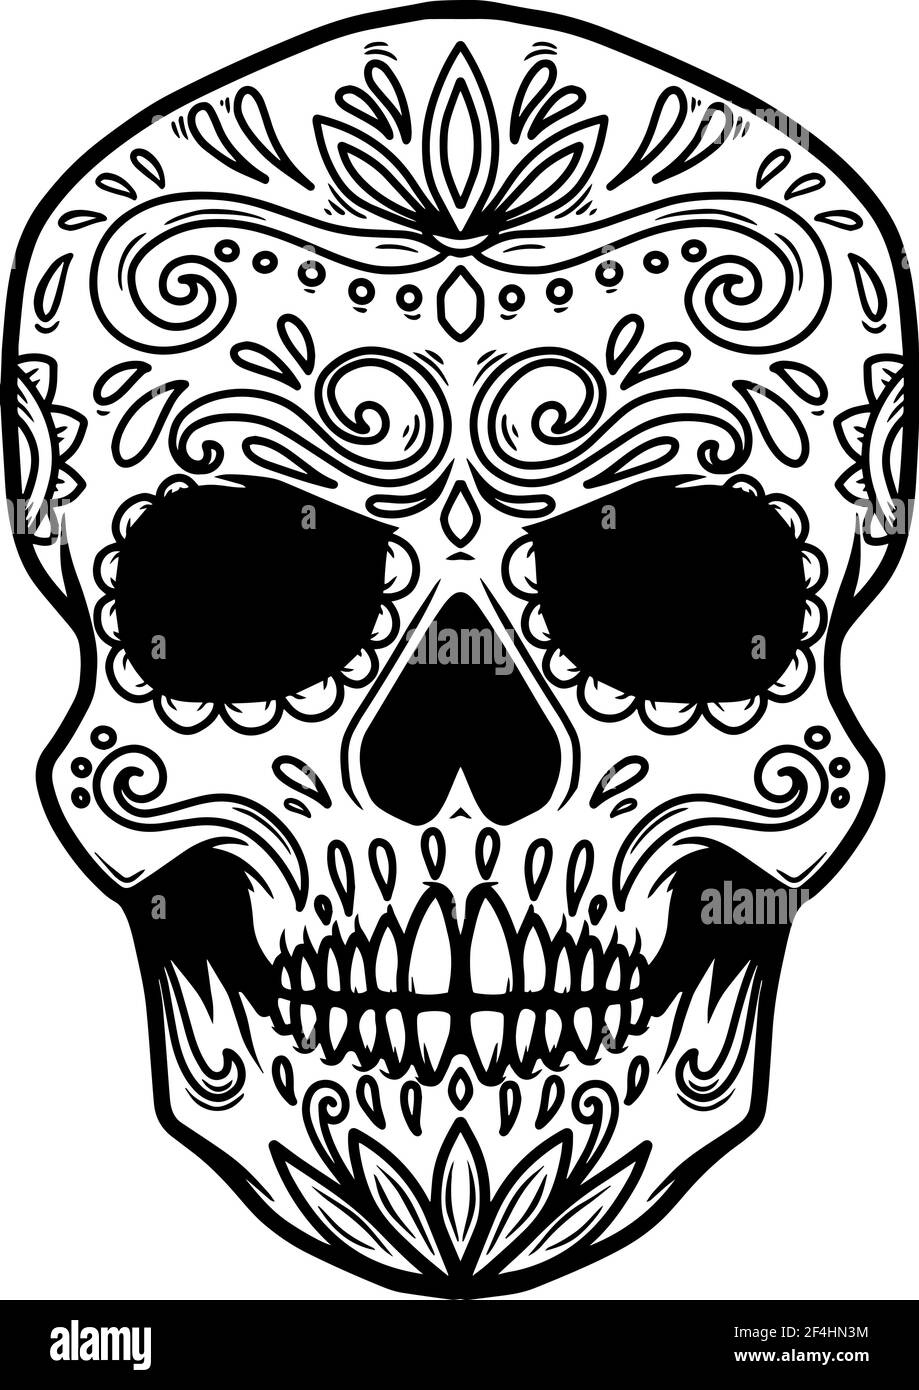 Illustration of mexican sugar skull. Design element for logo, label, sign, poster. Vector illustration Stock Vector